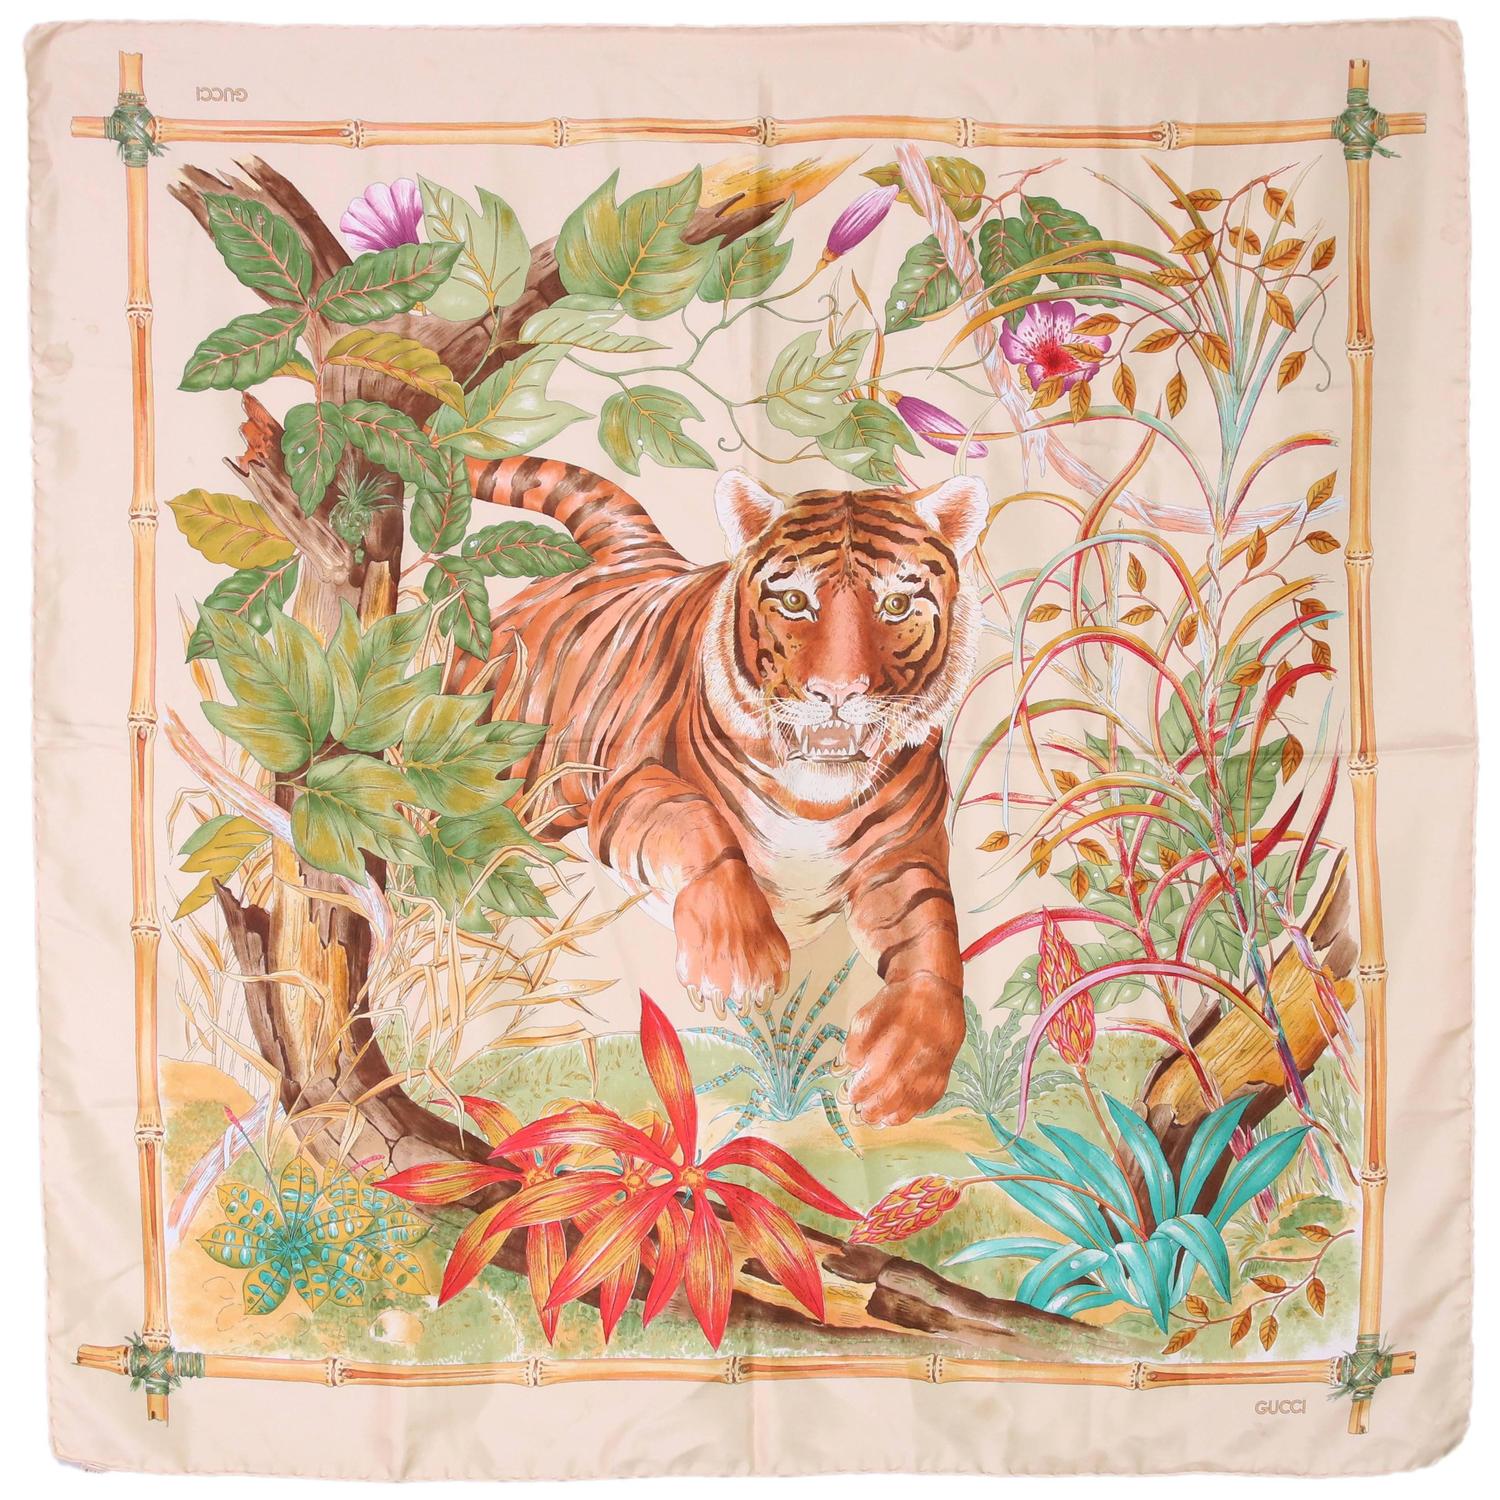 1970s Gucci Silk Scarf Featuring A Tiger Against A Jungle